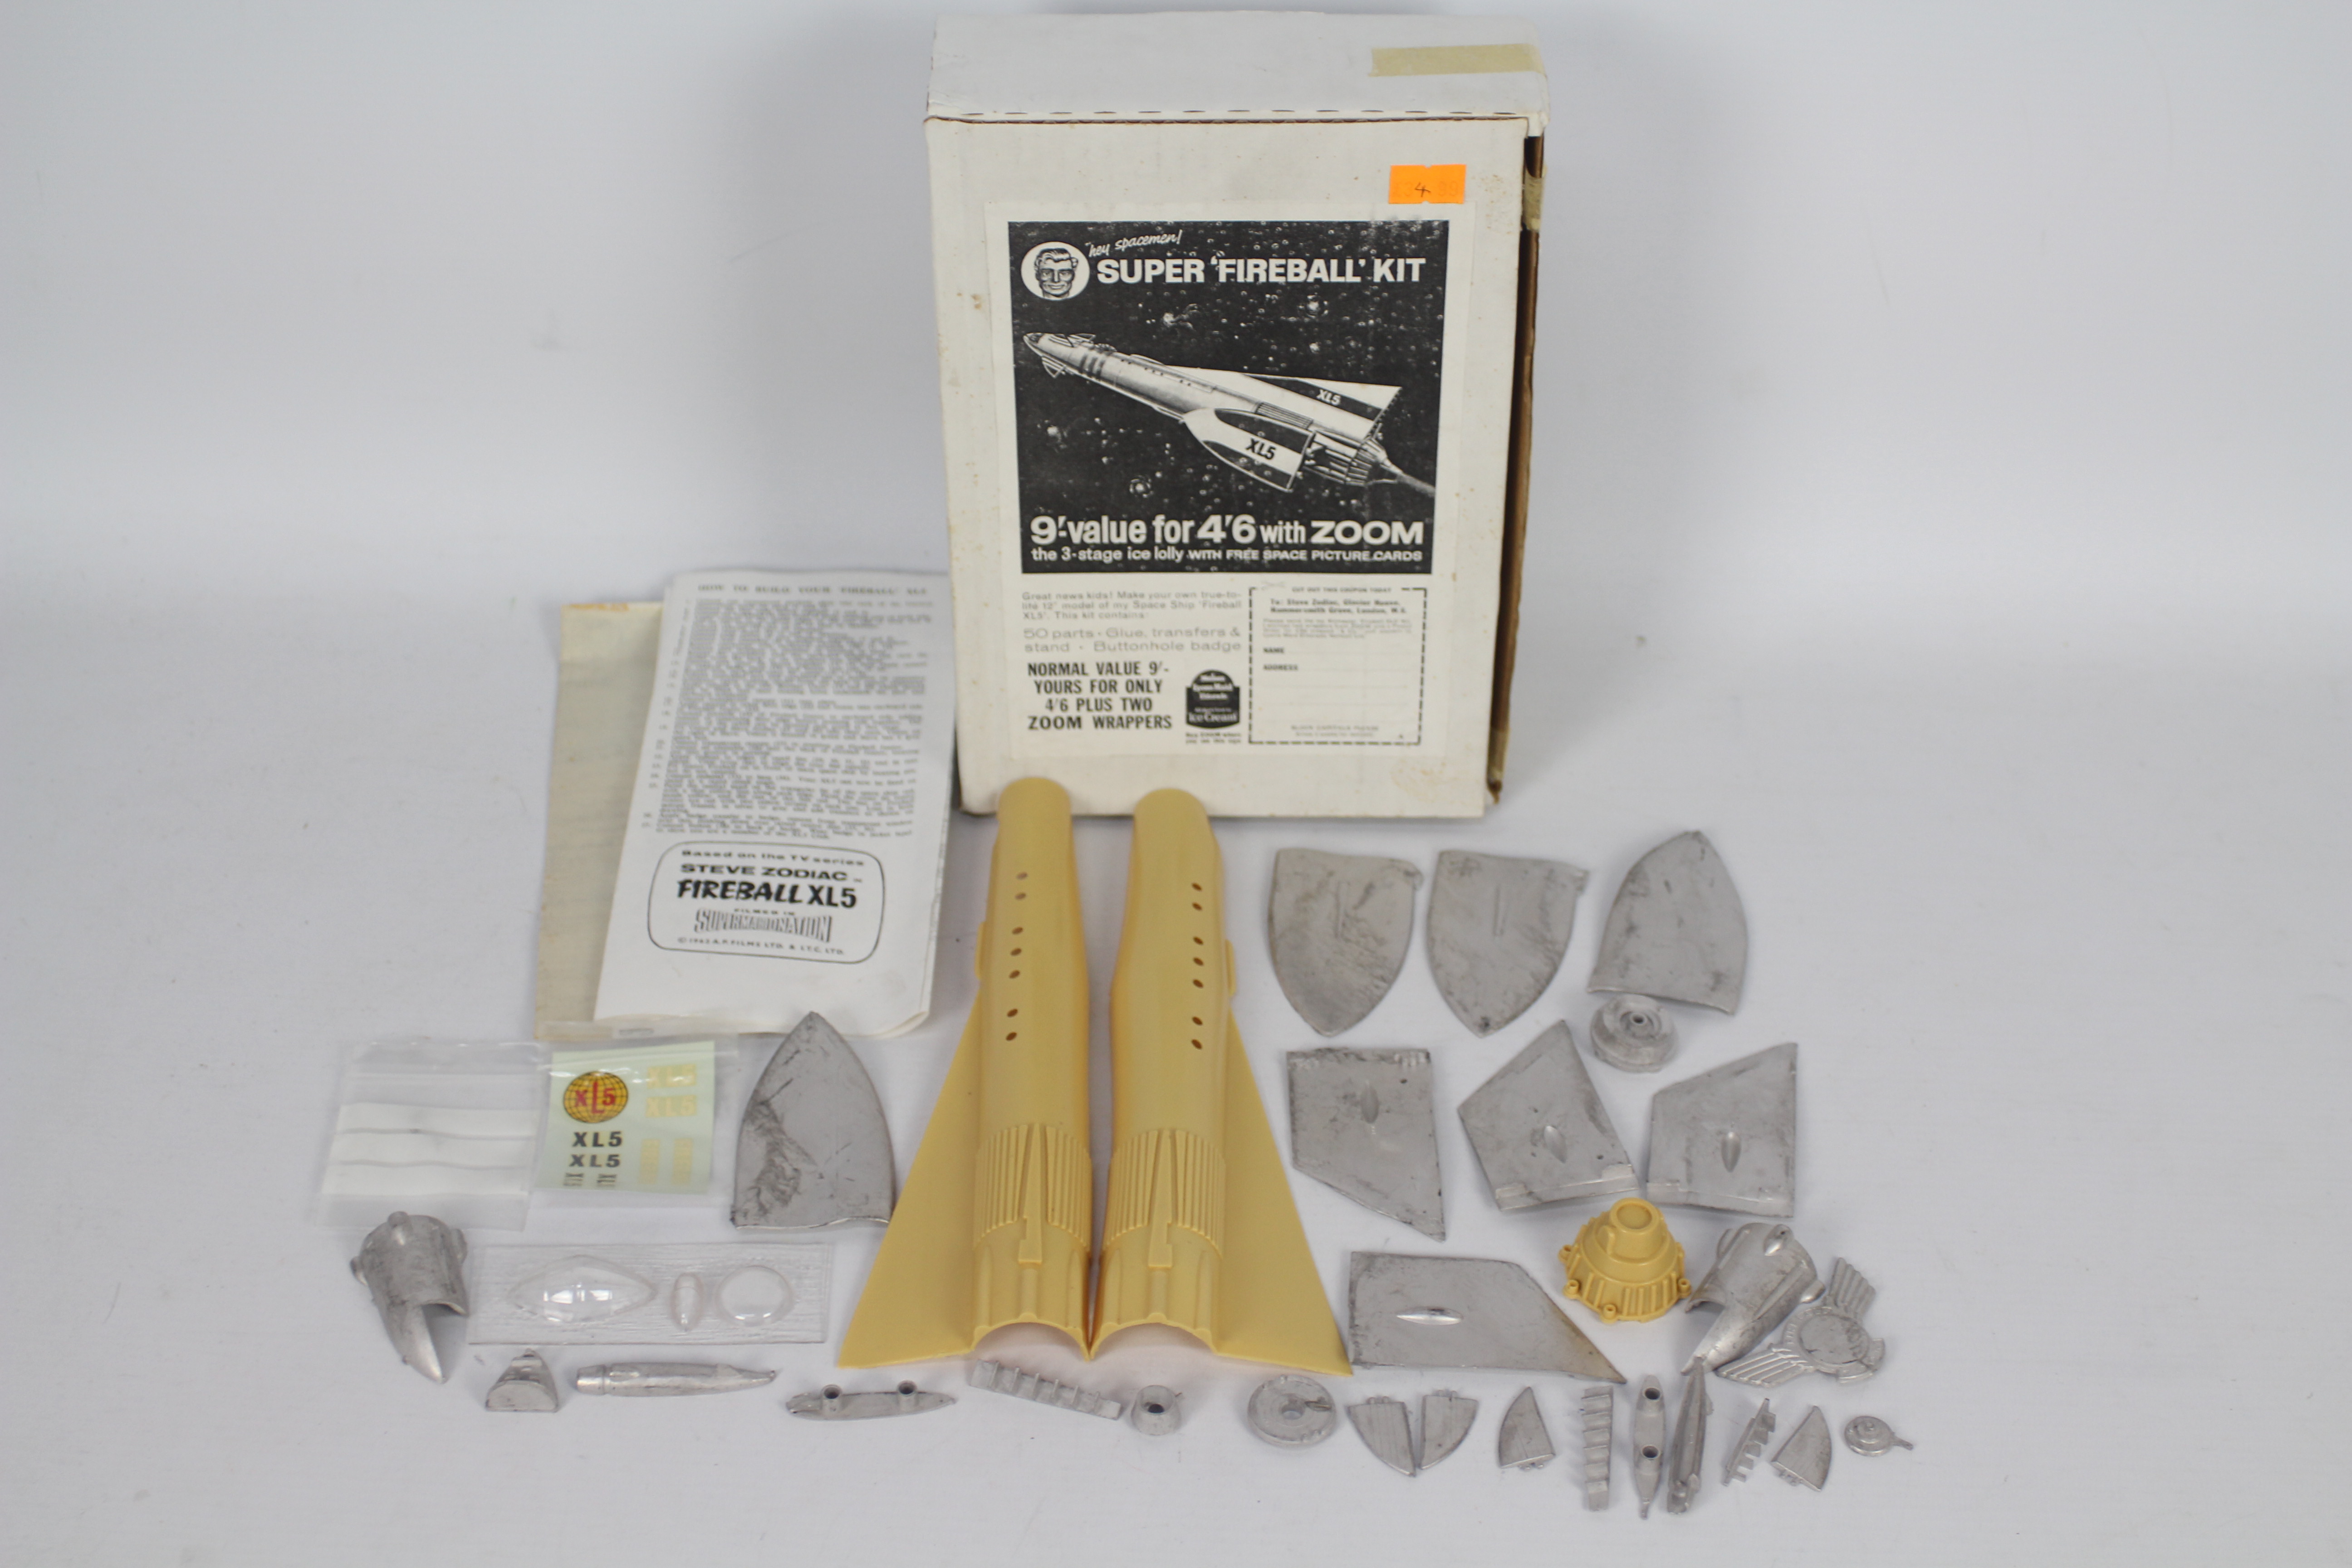 Kitmaster - A vintage boxed Kitmaster plastic and metal model kit.